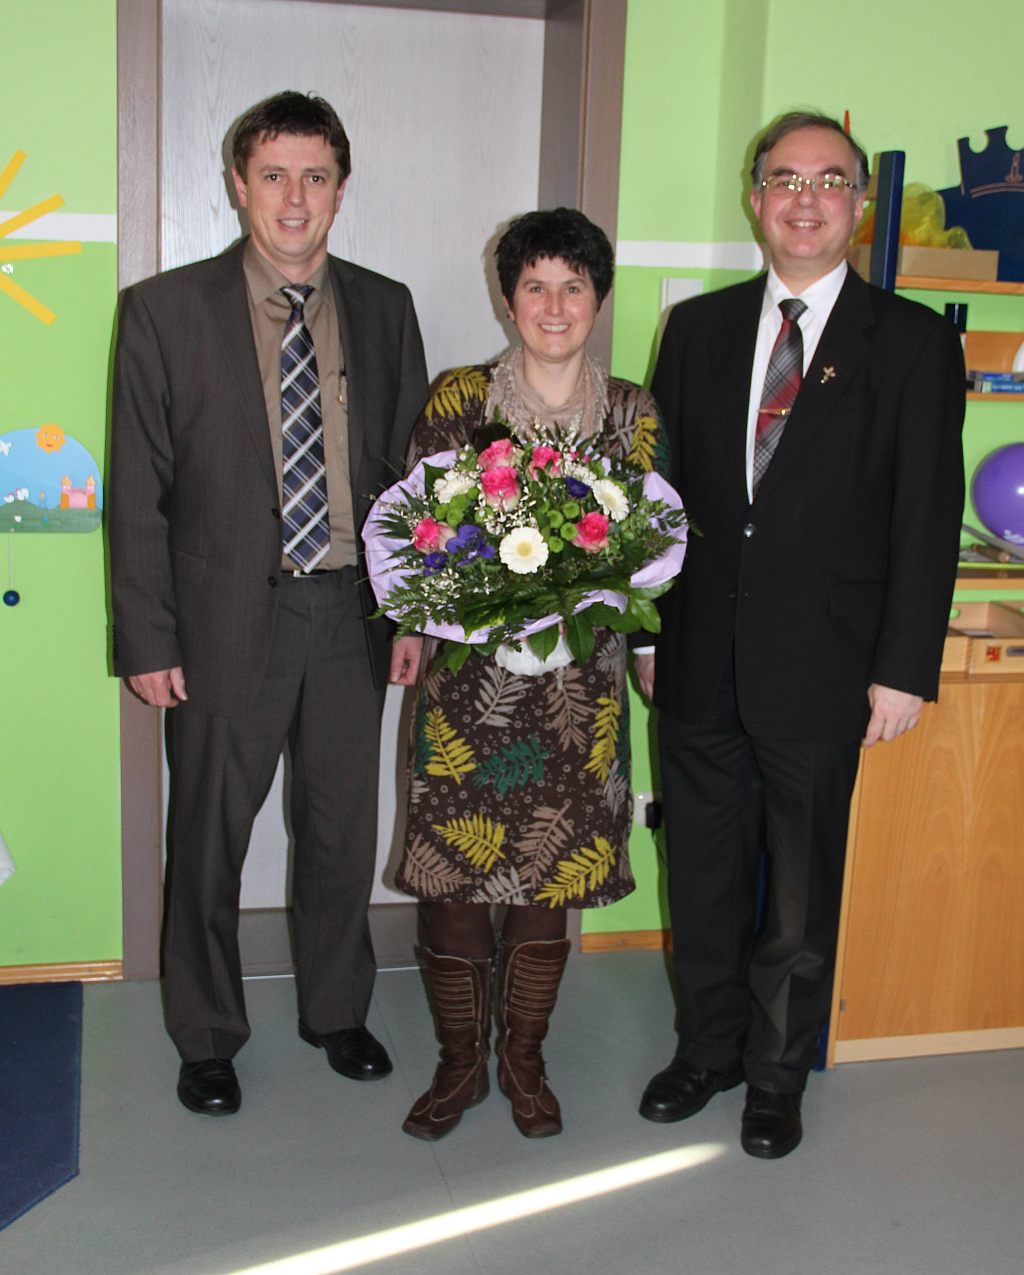 Bürgermeister Ewald Seifert, Kindergartenleiterin Sieglinde Hillenbrand, Pfarrer Dr. Peter Maier bei der Verabschiedung